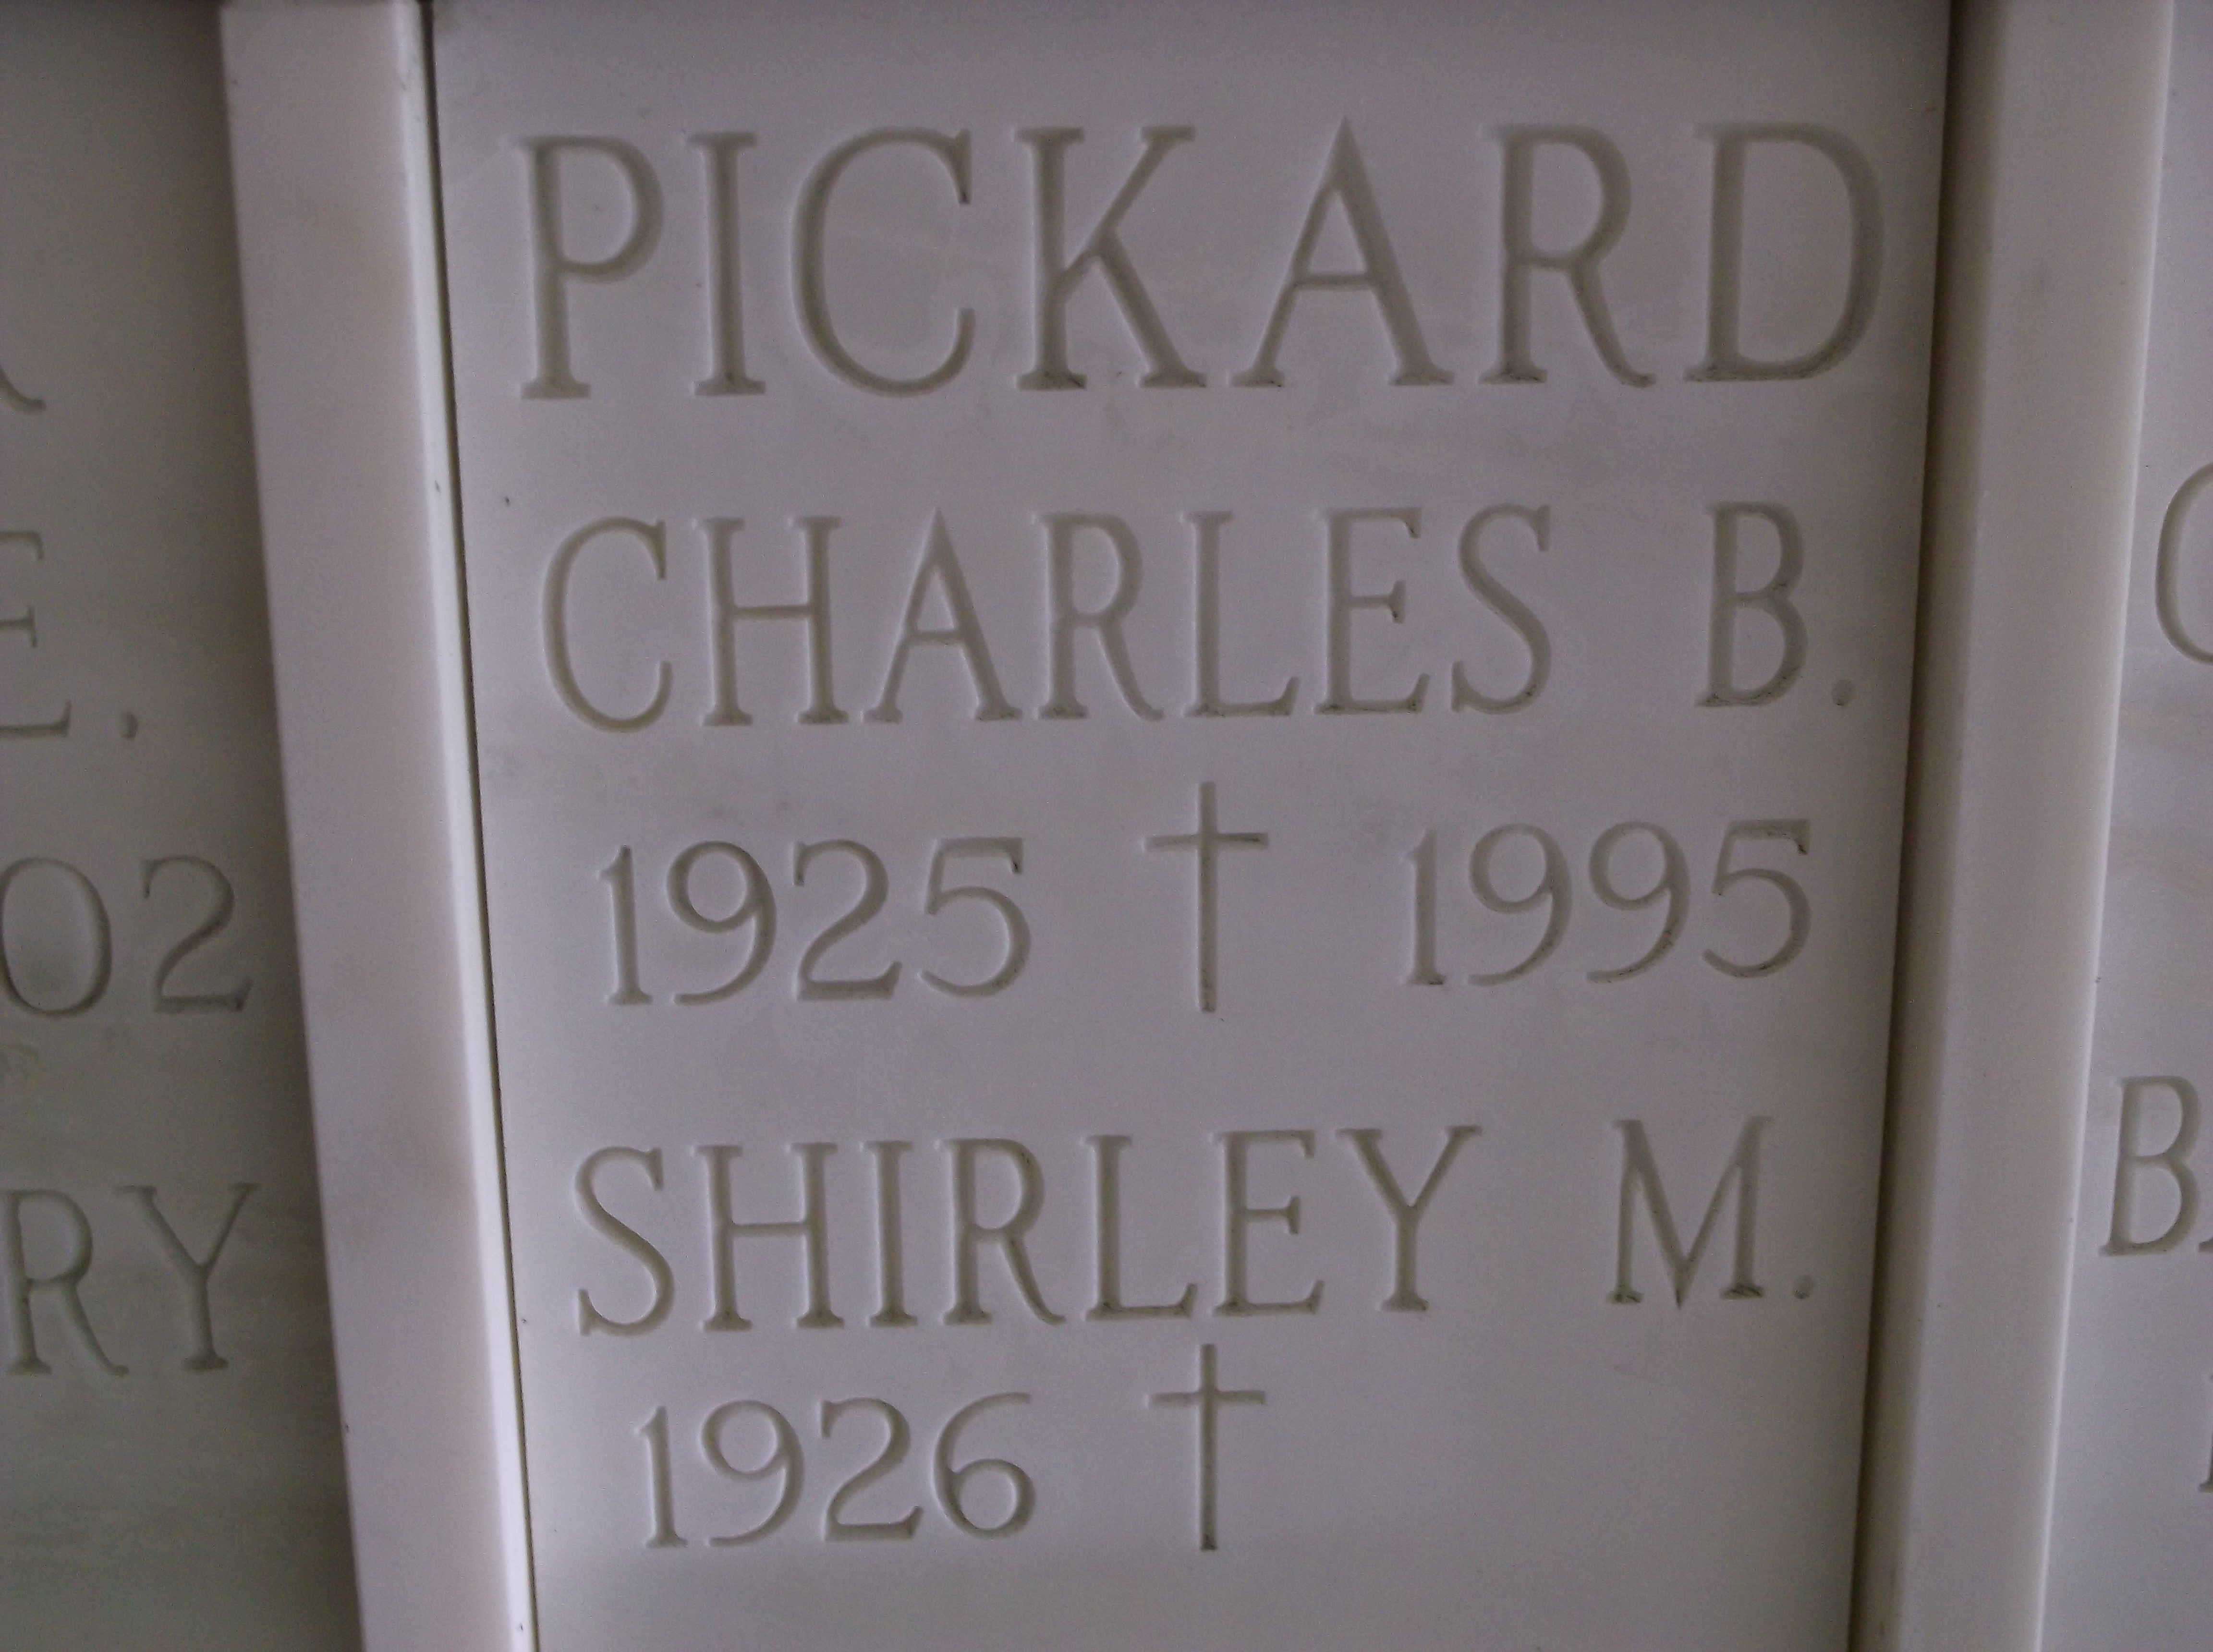 Shirley M Pickard